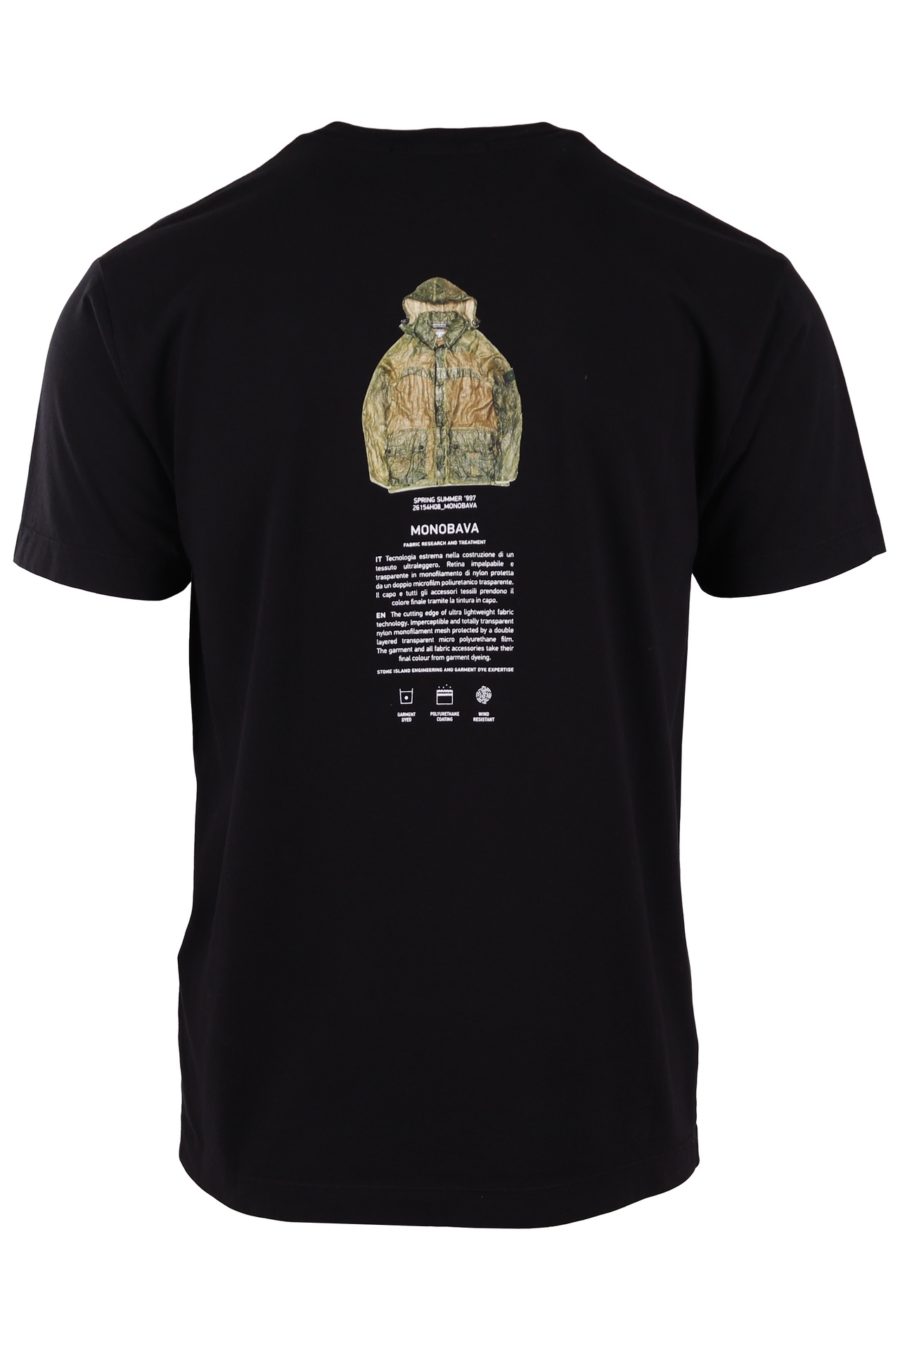 T-shirt Stone Island black with logo "archivio" - 22d5c84adfa677dabd0422034ff84f27f78f2575